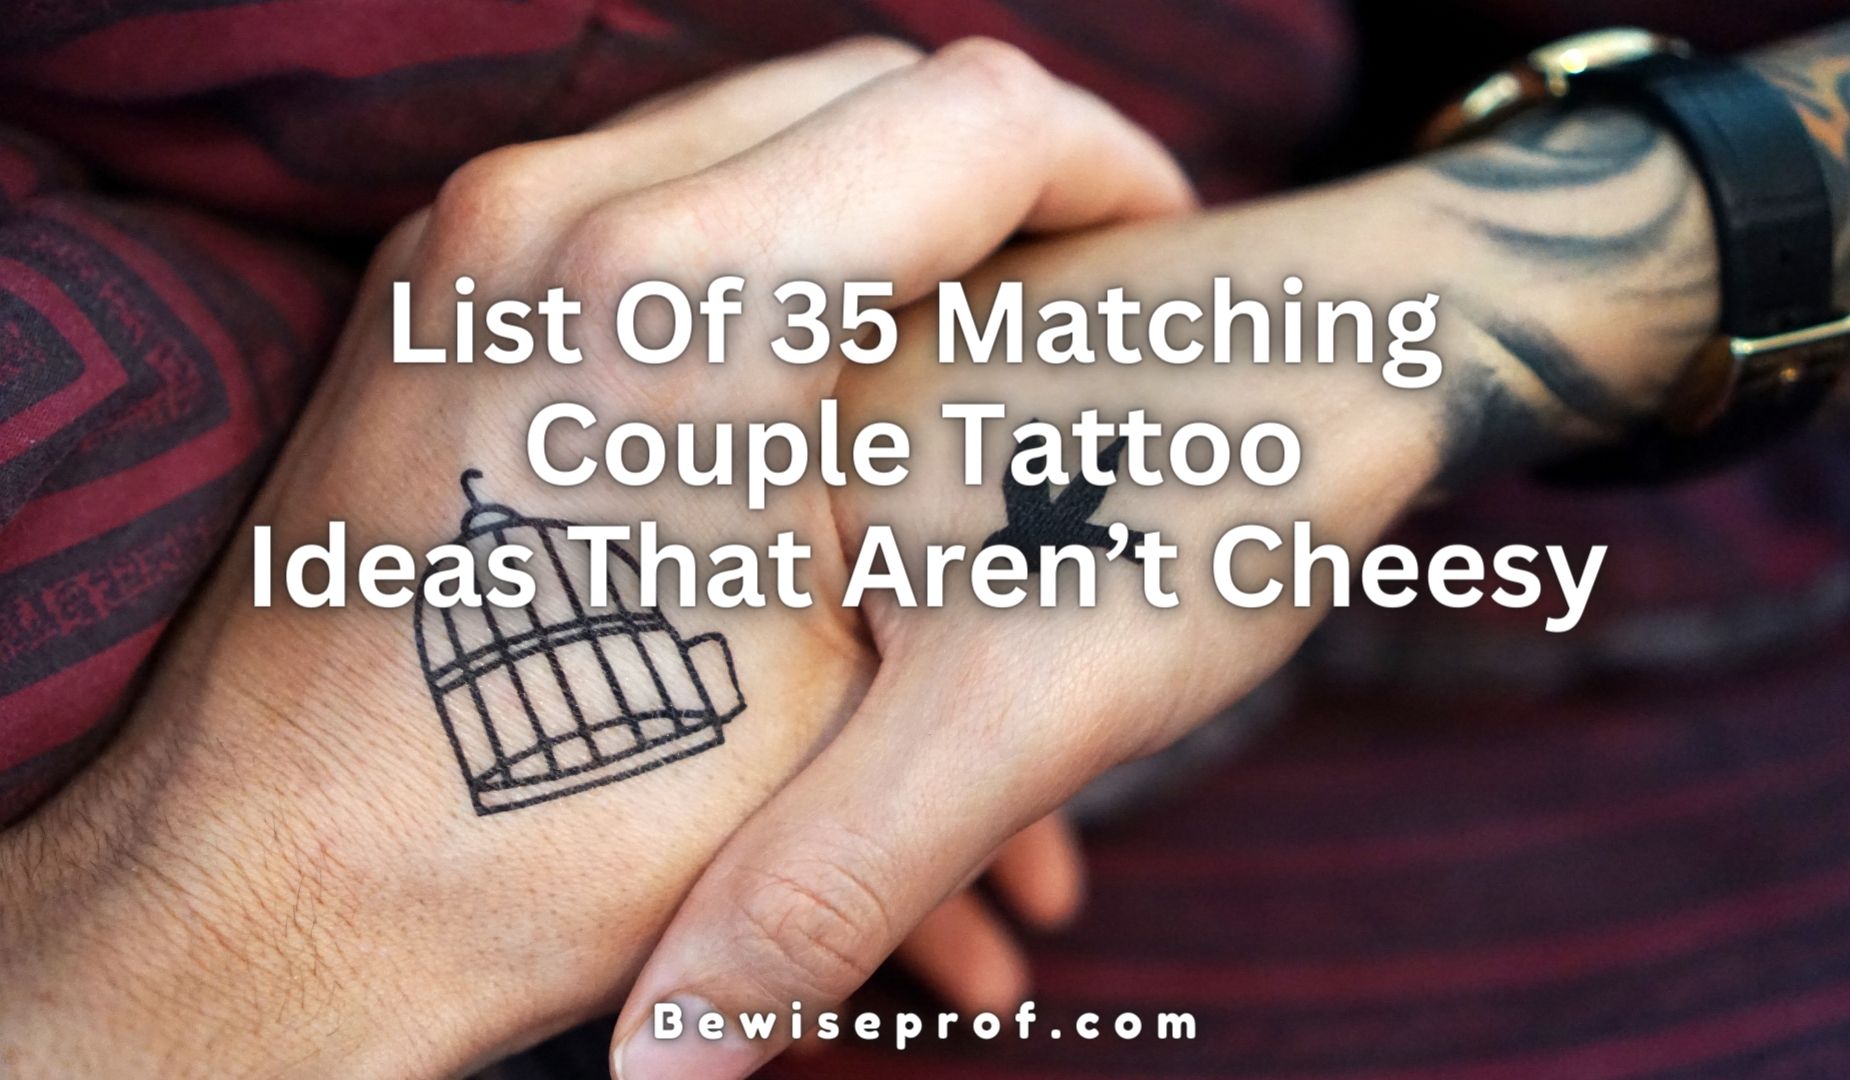 List Of 35 Matching Couple Tattoo Ideas